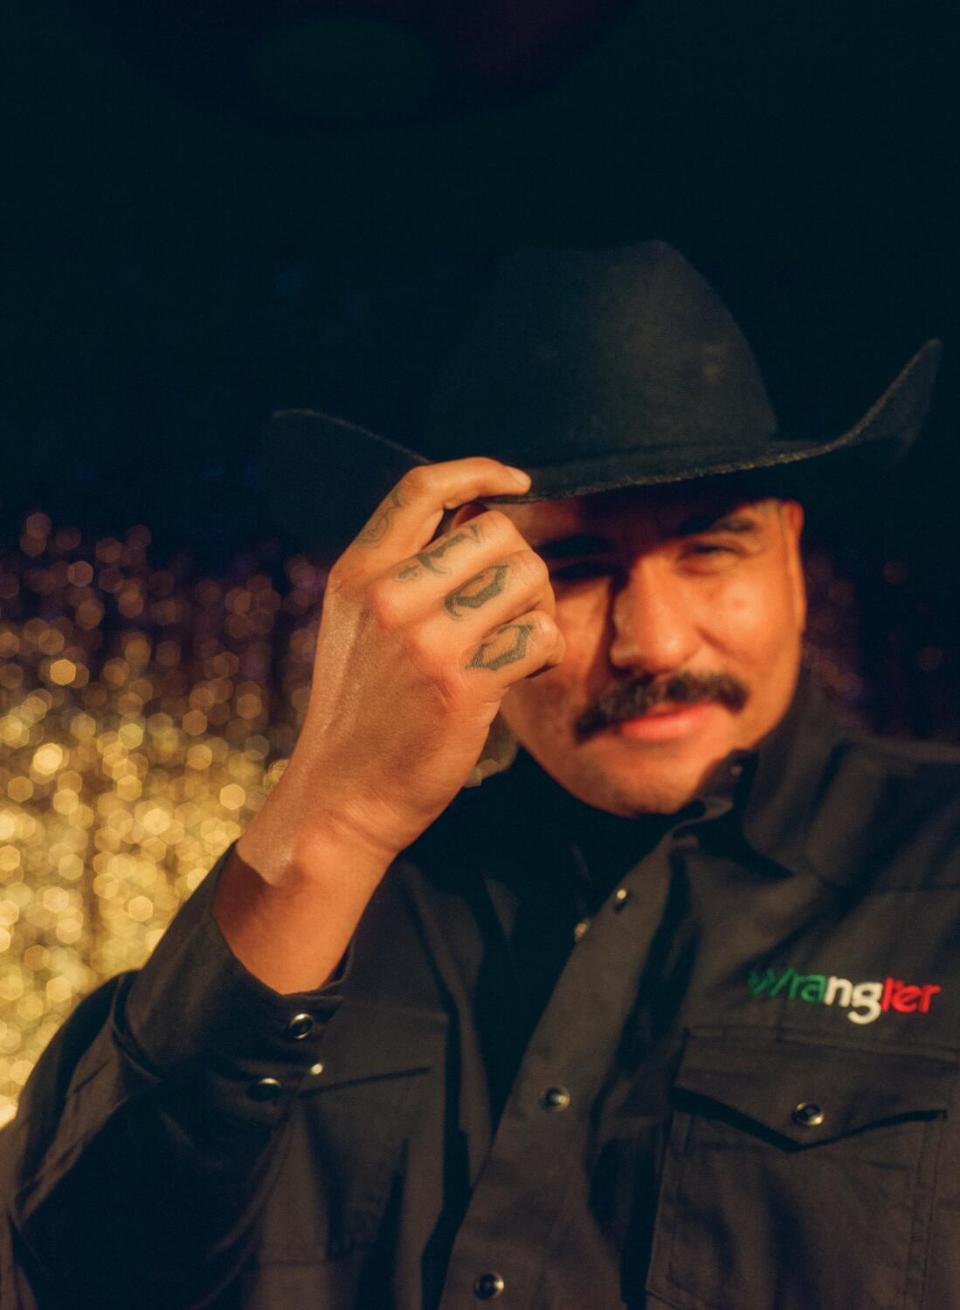 A man winks at the camera, wearing a black cowboy hat